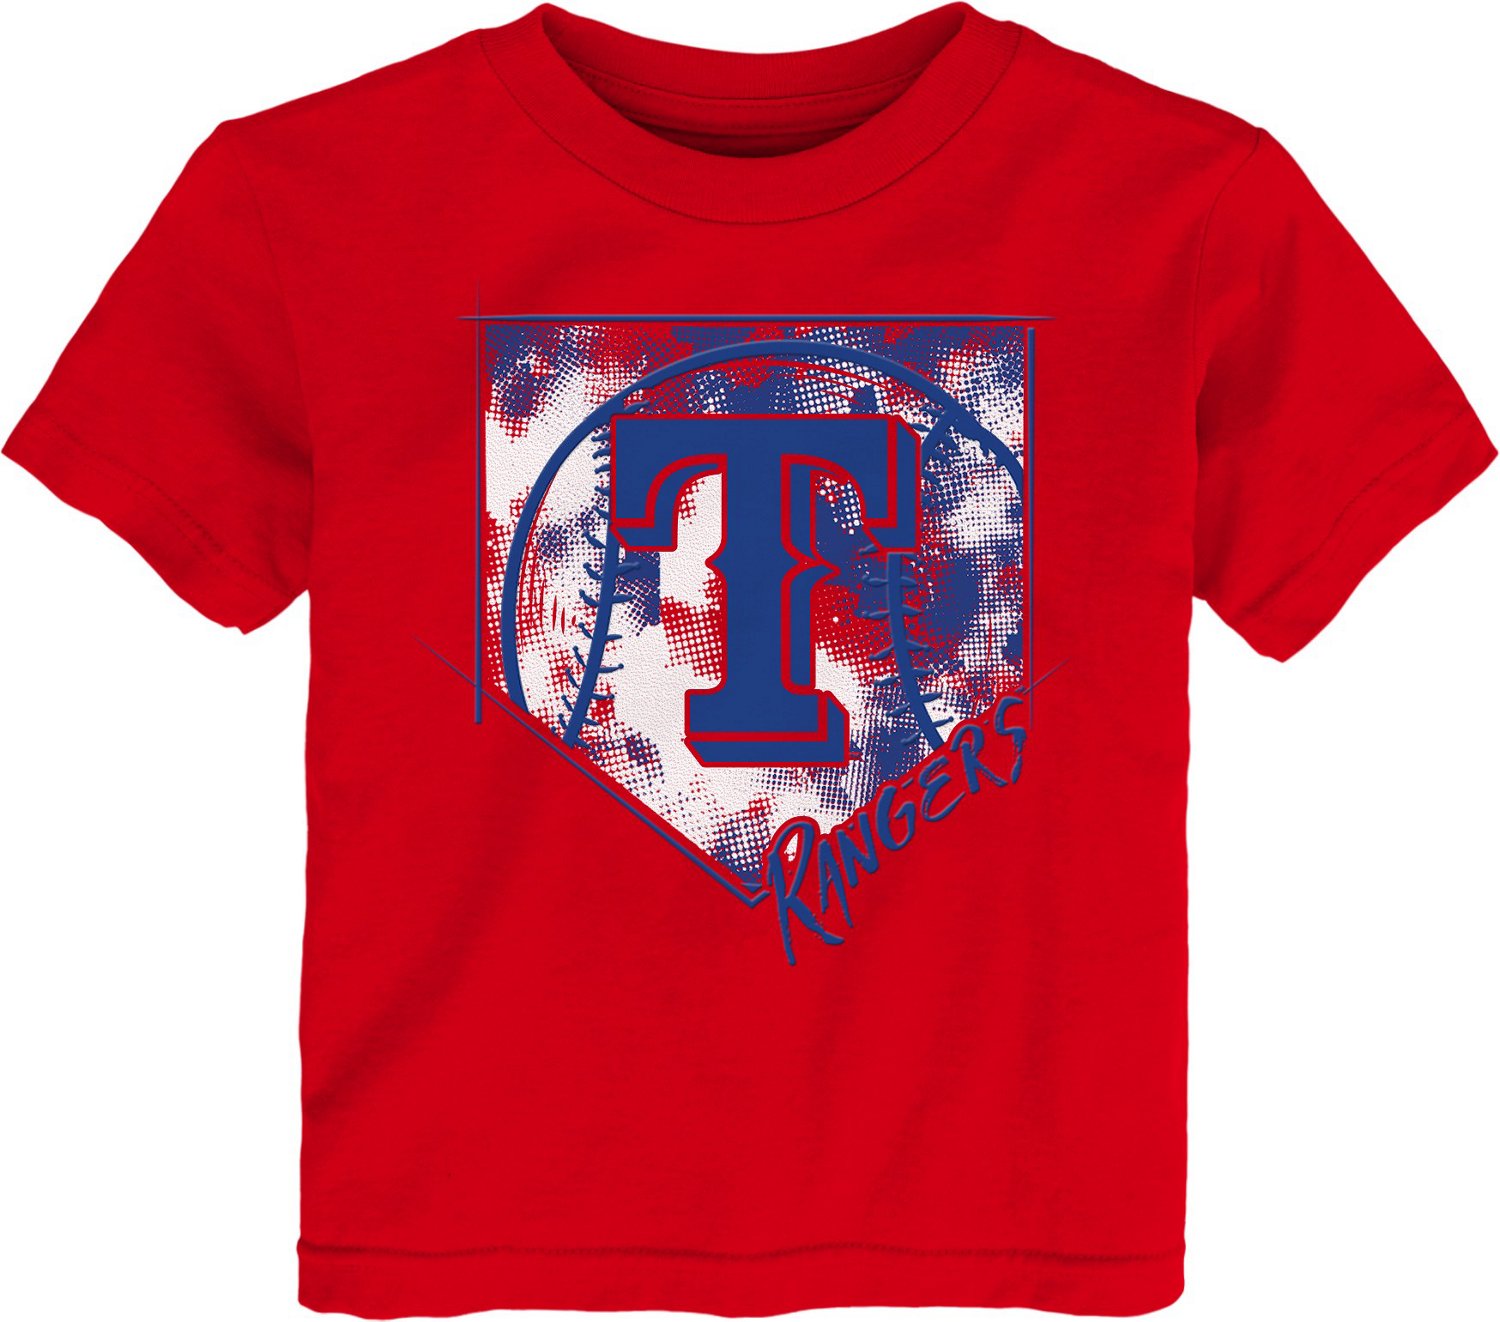 Outerstuff Toddler Boys' Texas Rangers Home Field Graphic T-shirt